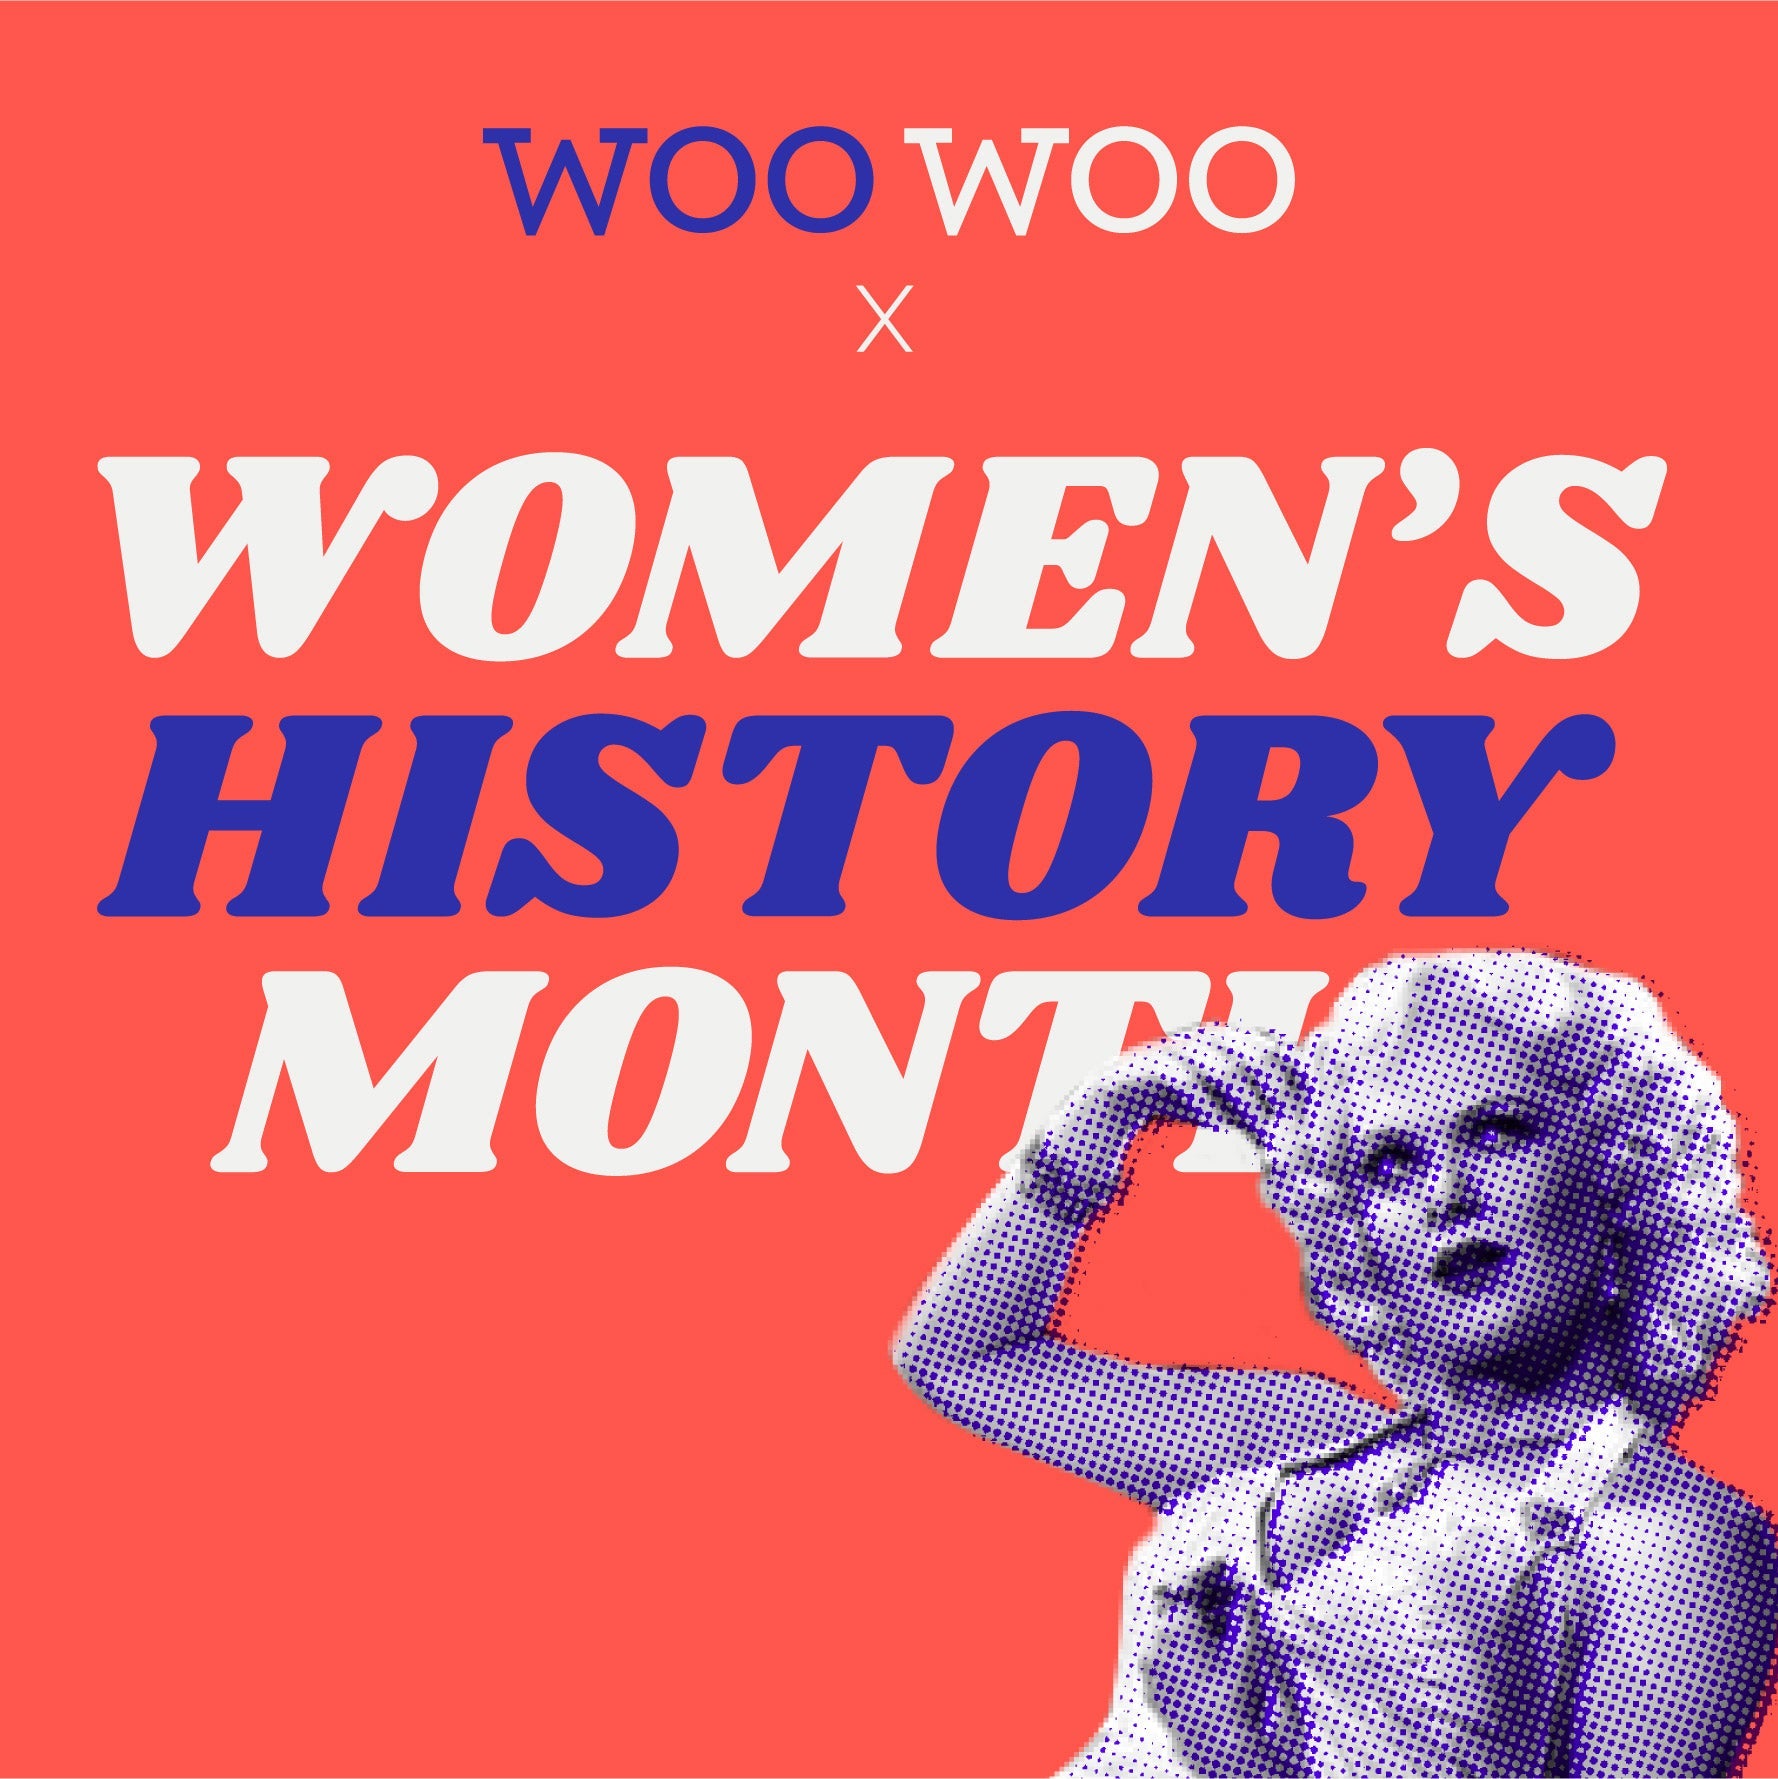 WooWoo x Women's History Month